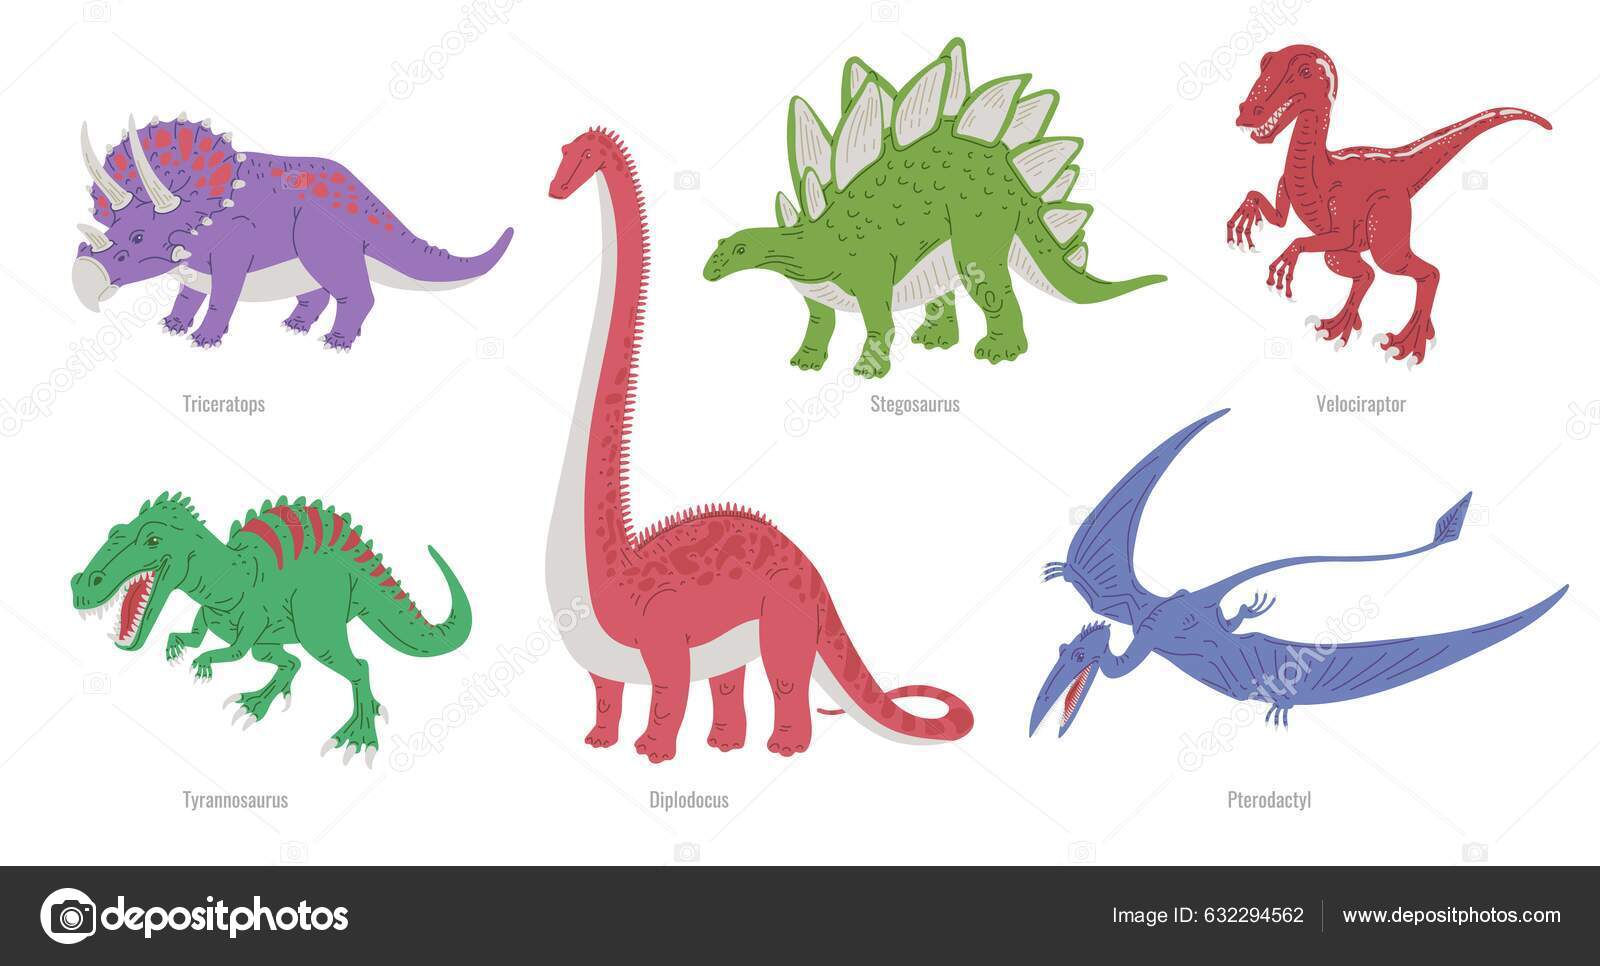 Dinosaur names Vector Art Stock Images | Depositphotos